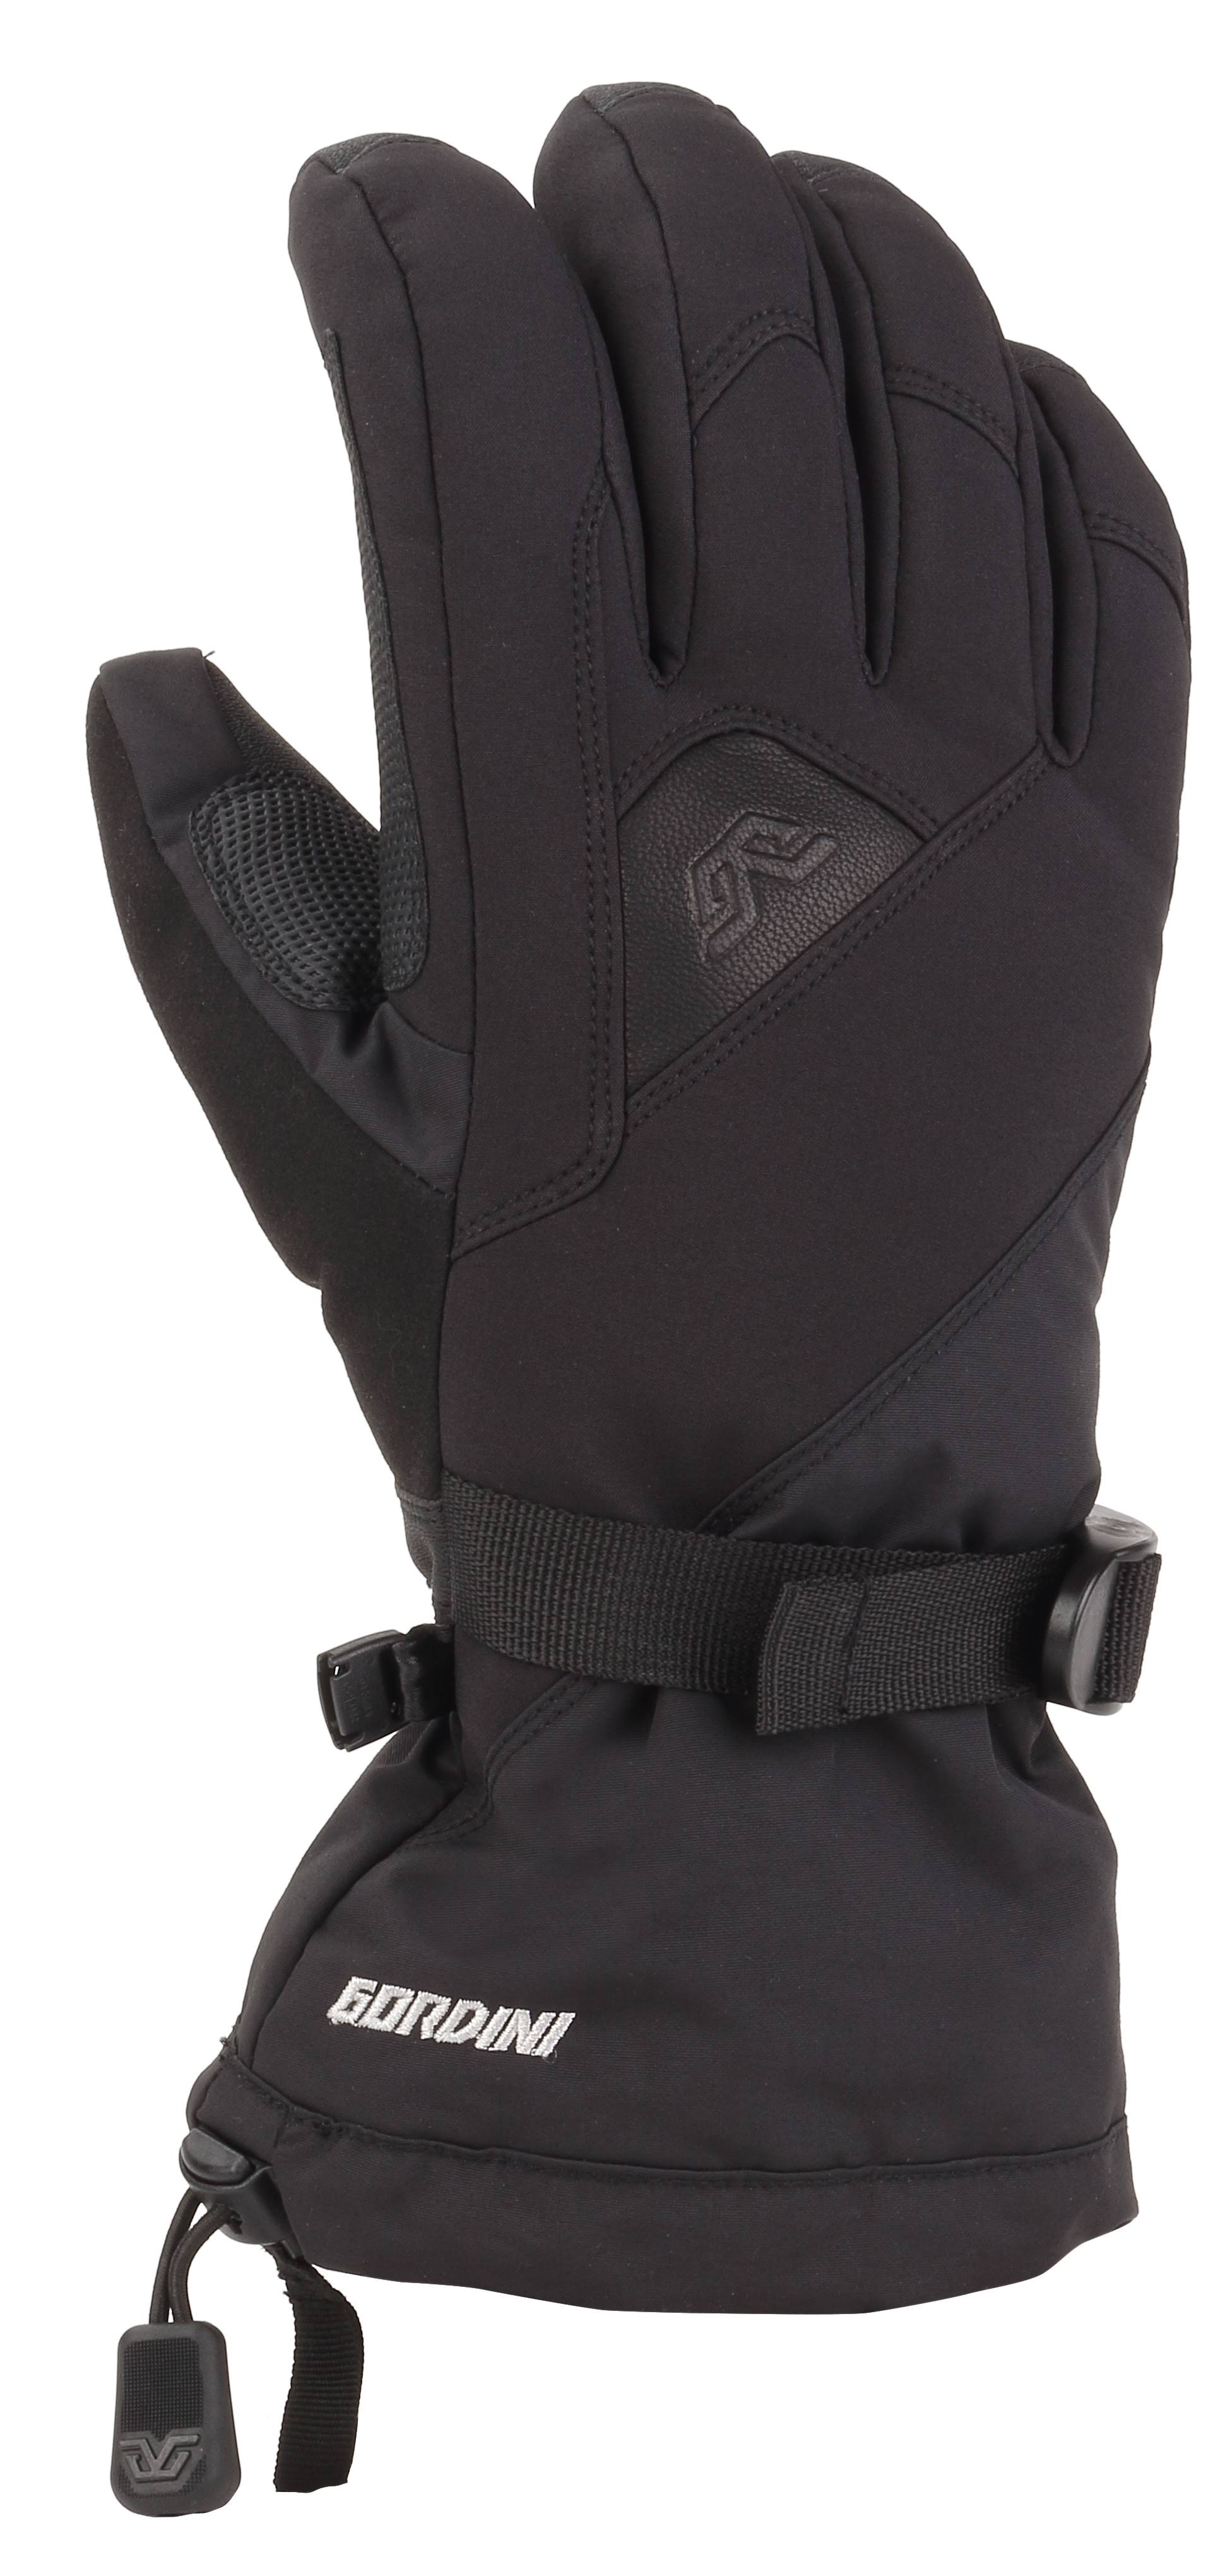 Gordini Women's Aquabloc Down Gauntlet Gloves Black L